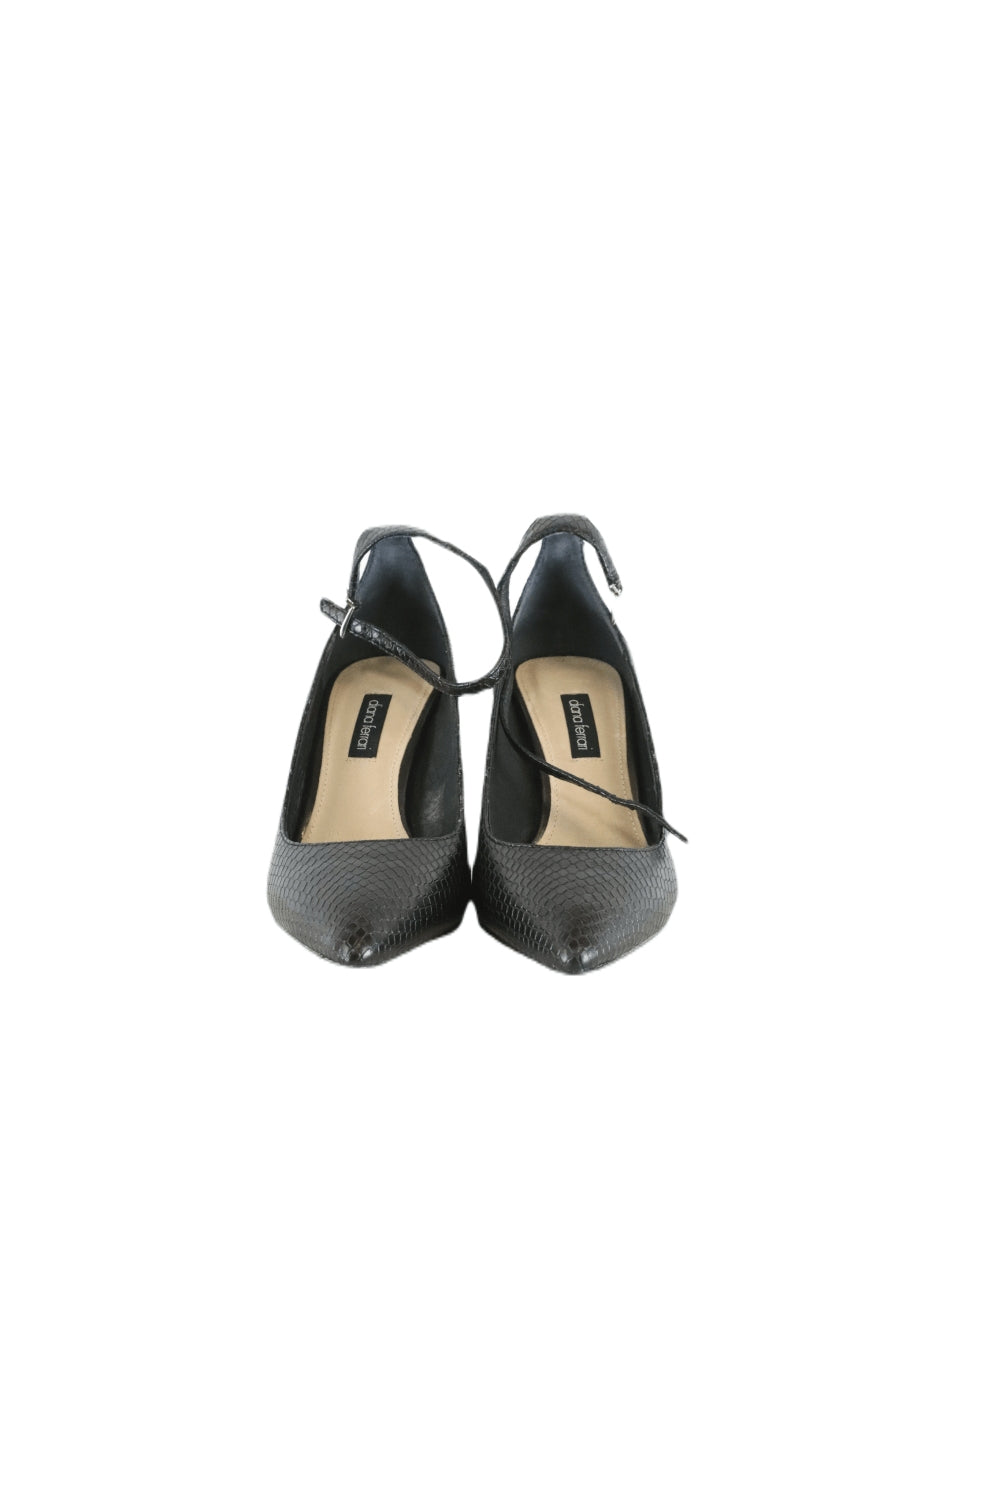 Diana Ferrari Black Heels 7.5